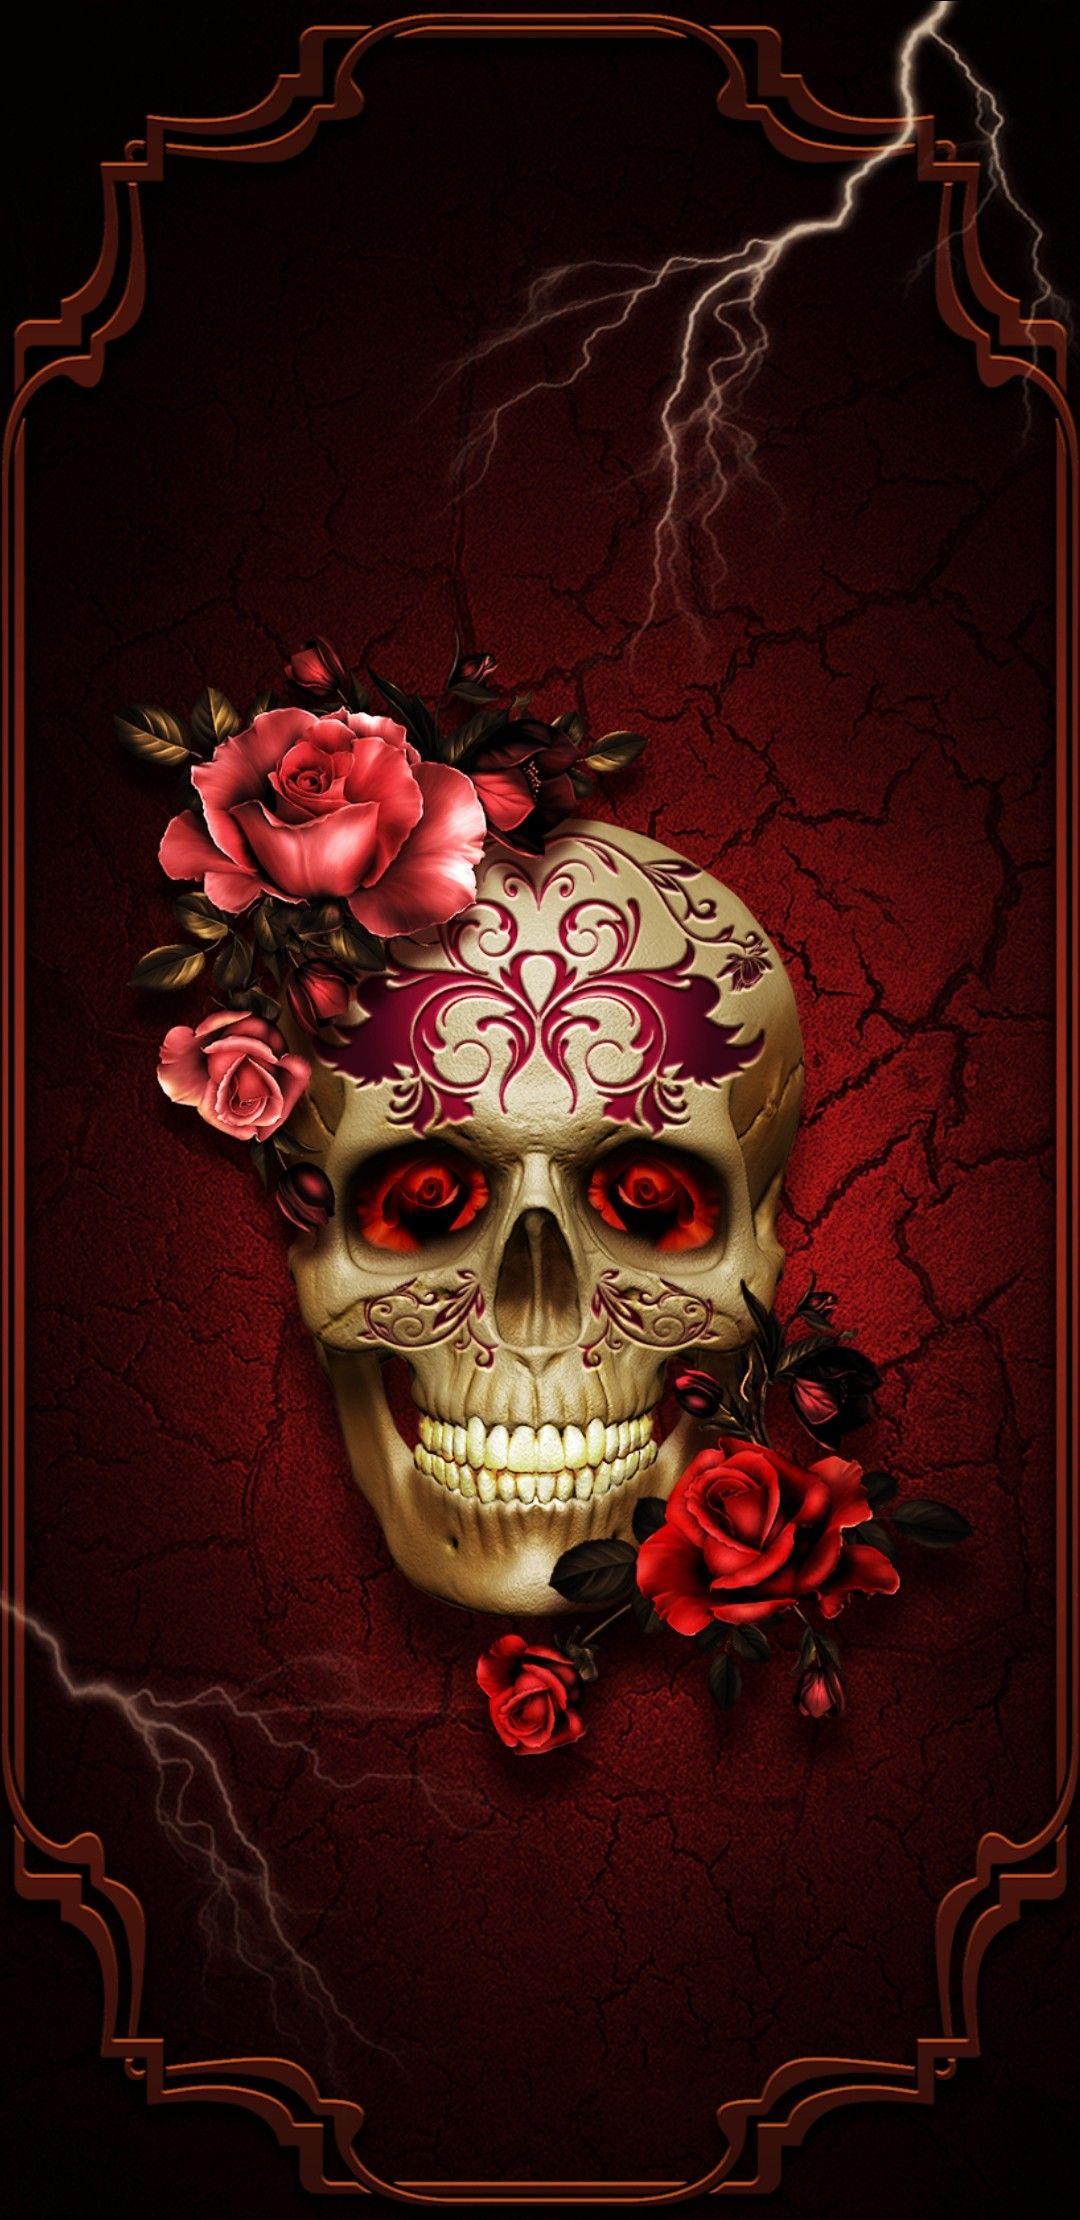 Skull / Skeleton Wallpaper. Skull wallpaper, Skull art, Skull artwork